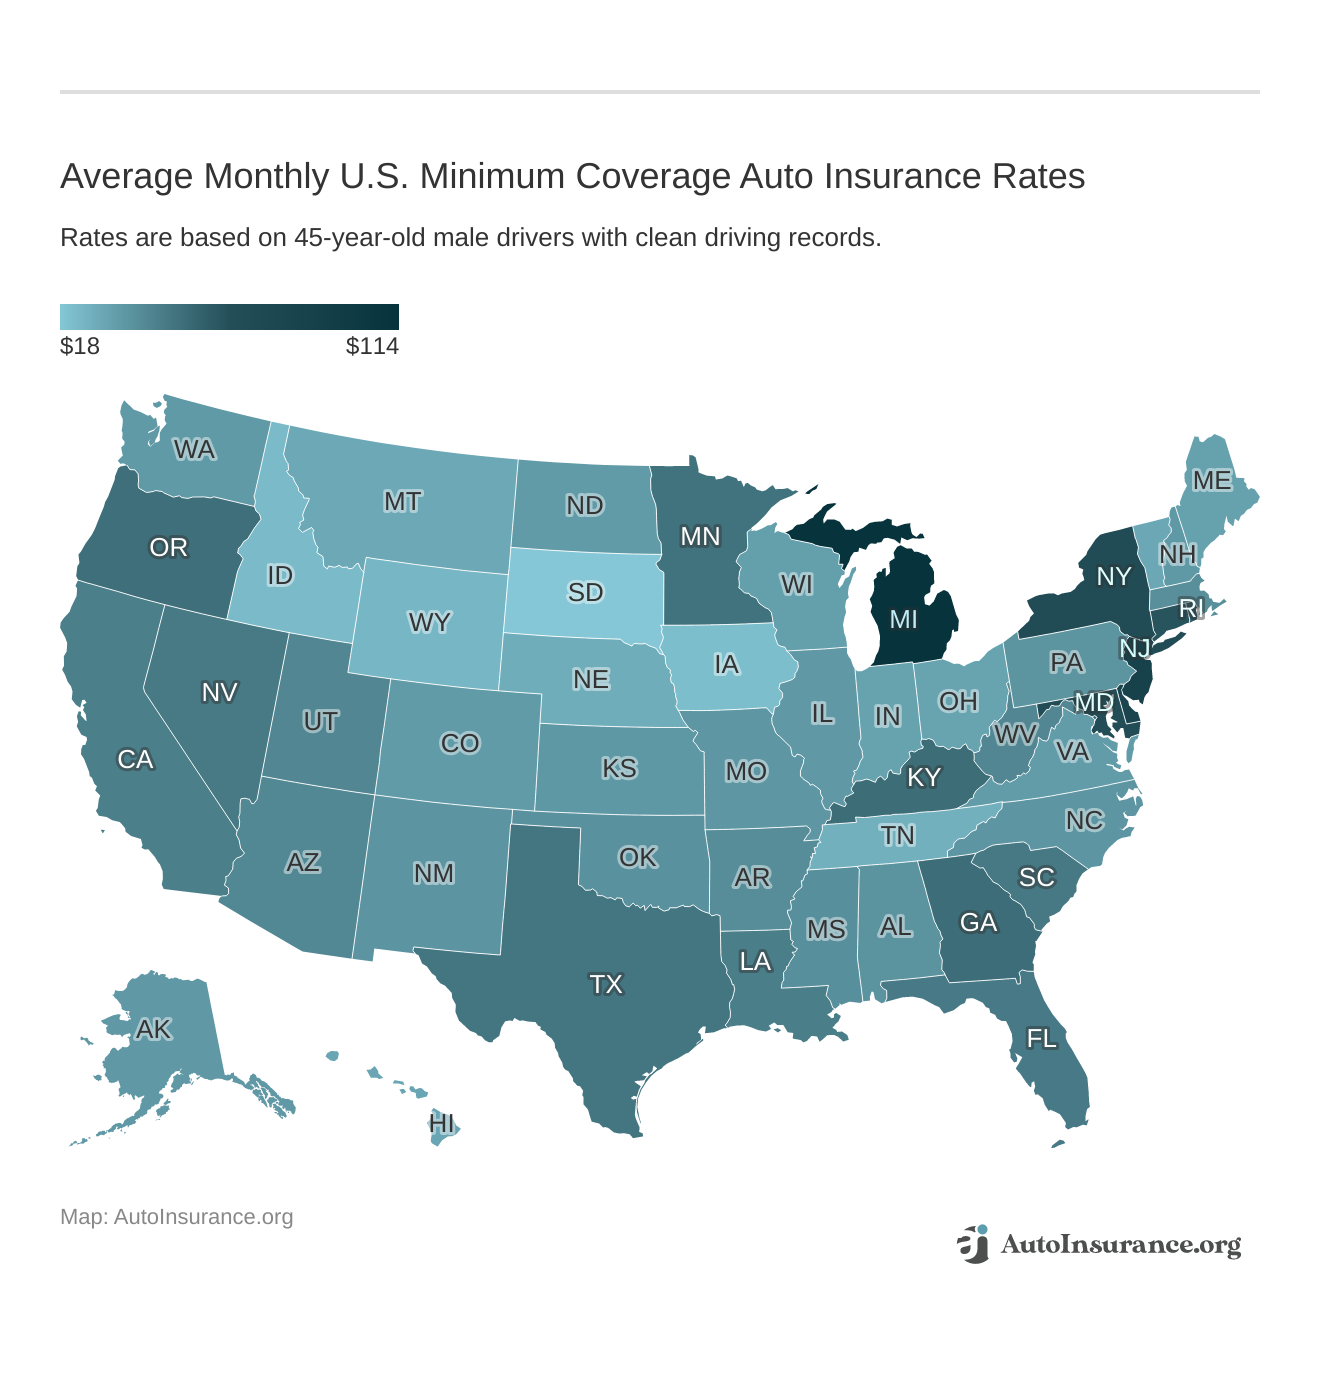 <h3>Average Monthly U.S. Minimum Coverage Auto Insurance Rates</h3>